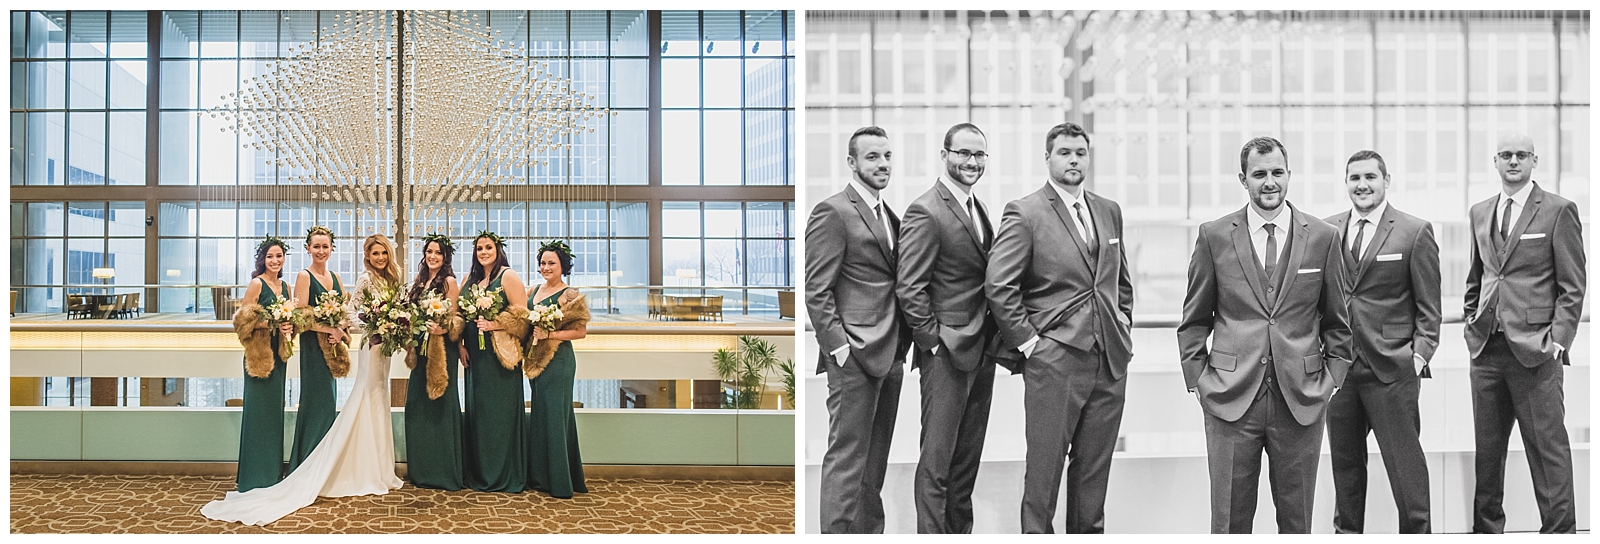 Wedding photography at the Sheraton Crown Center and Union Station by Kansas City wedding photographers Wisdom-Watson Weddings.